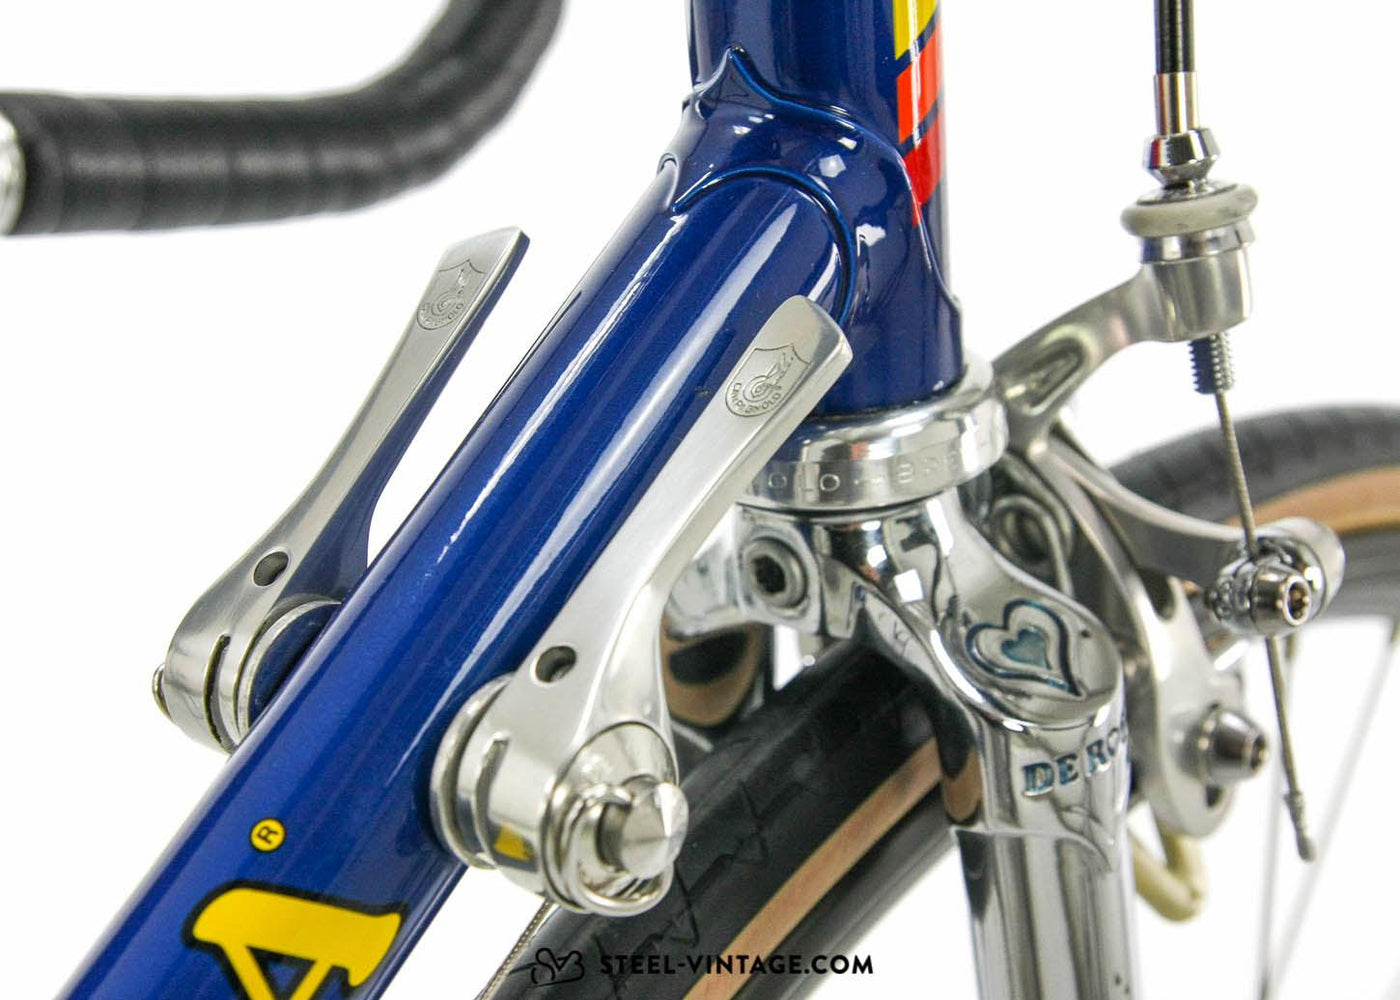 De Rosa Professional SLX Sammontana 1987 - Steel Vintage Bikes